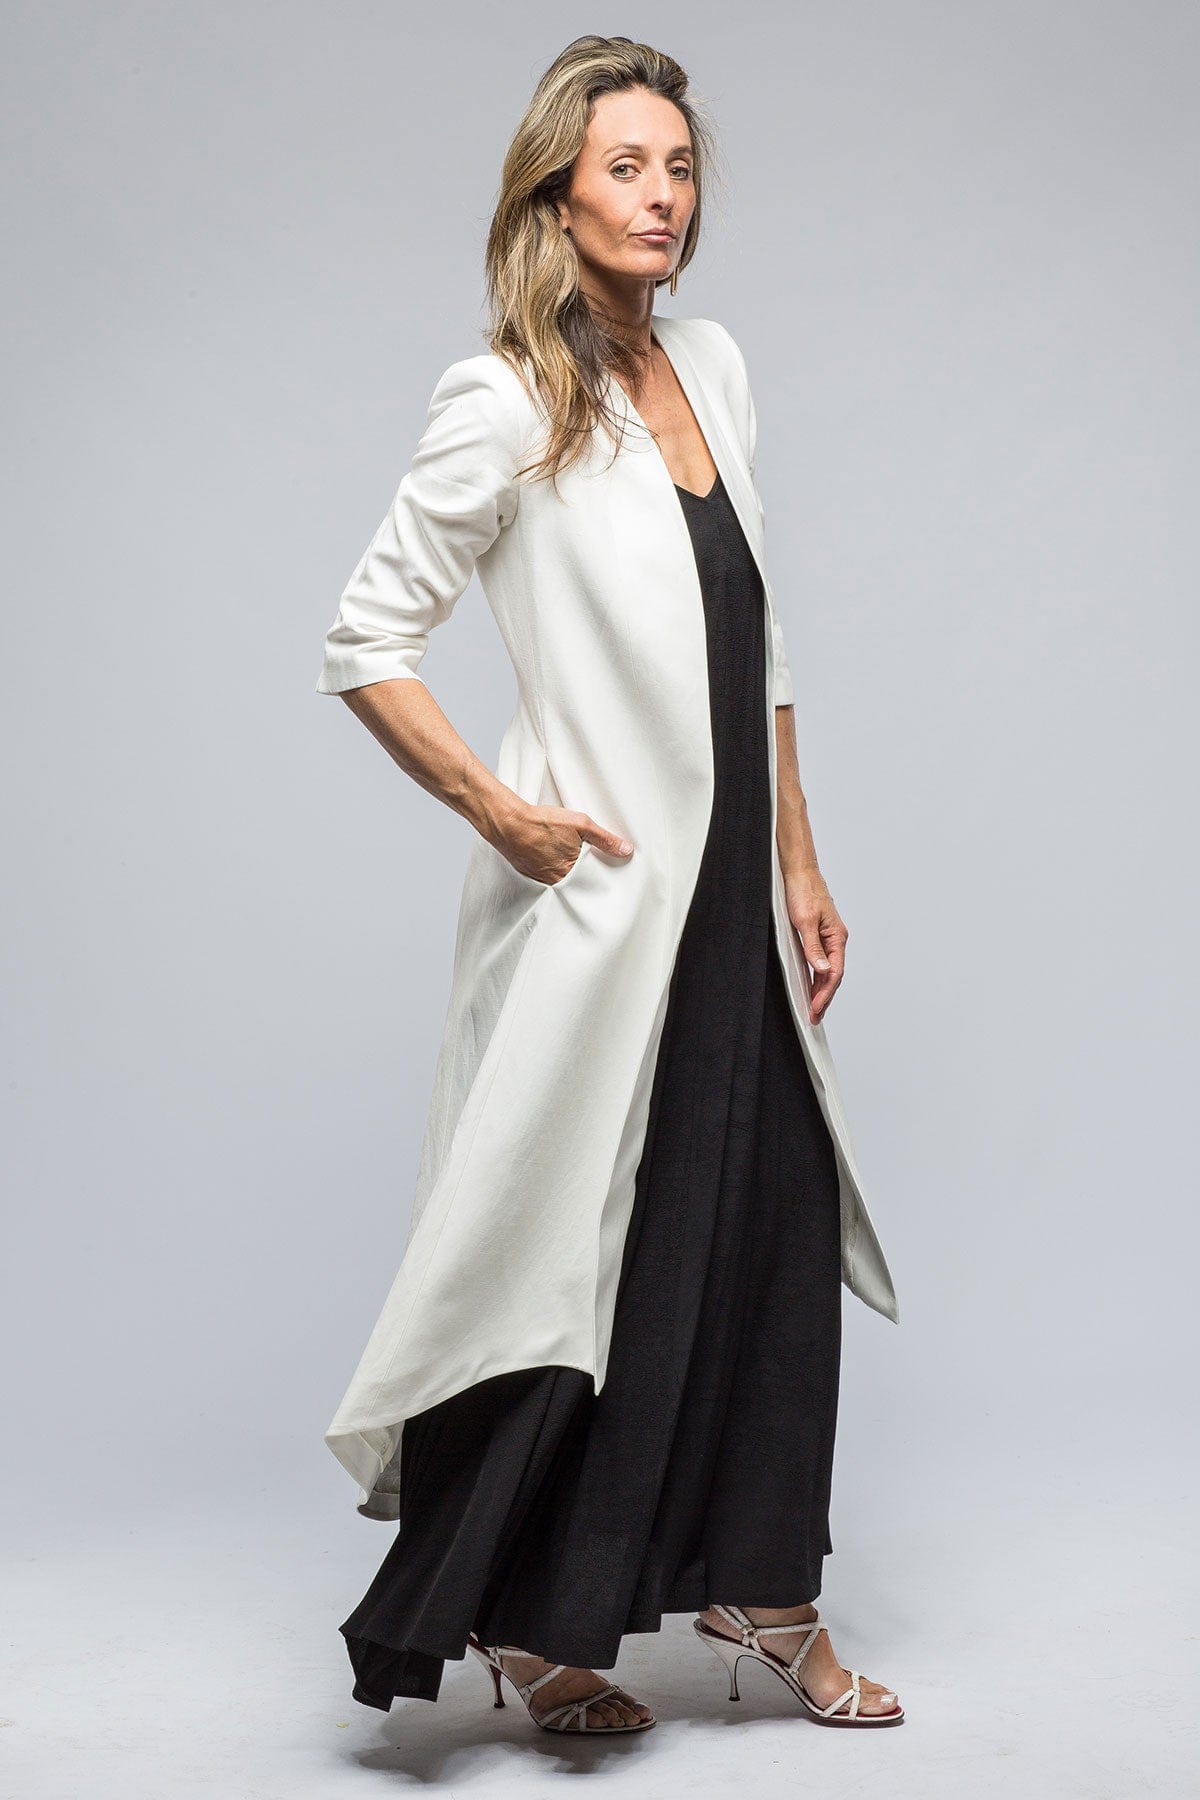 Morgana Long Coat In White Matte Viscose/Linen - AXEL'S